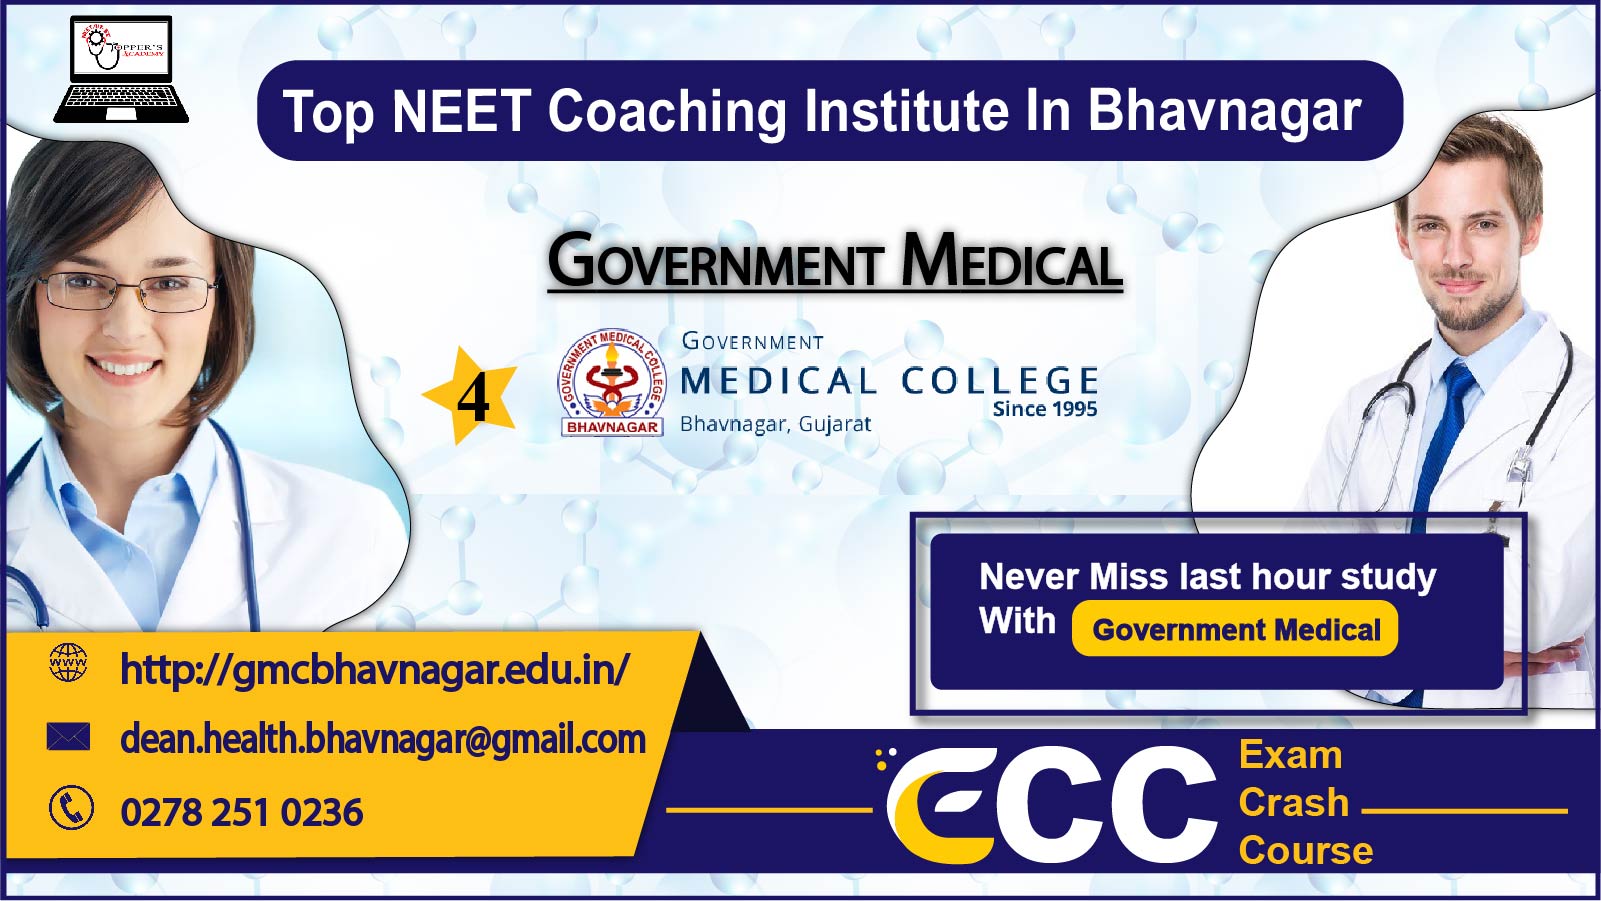 Government Medical College in Bhavnagar